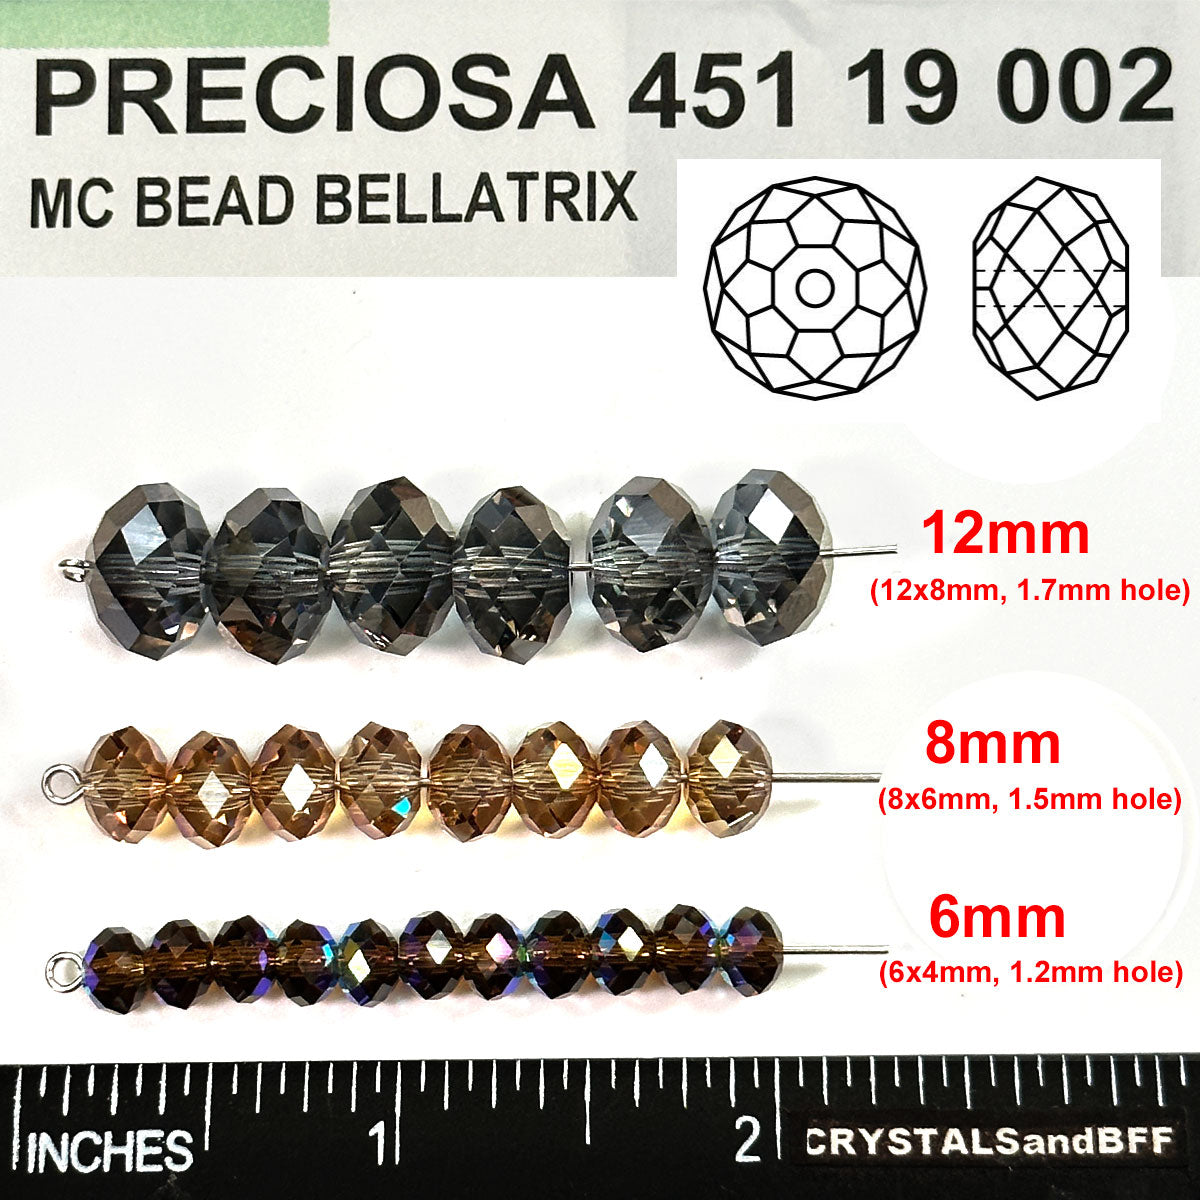 Crystal Argent Flare coated, Czech Machine Cut Bellatrix Crystal Beads, Preciosa 451-19-002, 6mm, 12mm, silvery moonlight spacer beads, #5040 Briolette cut